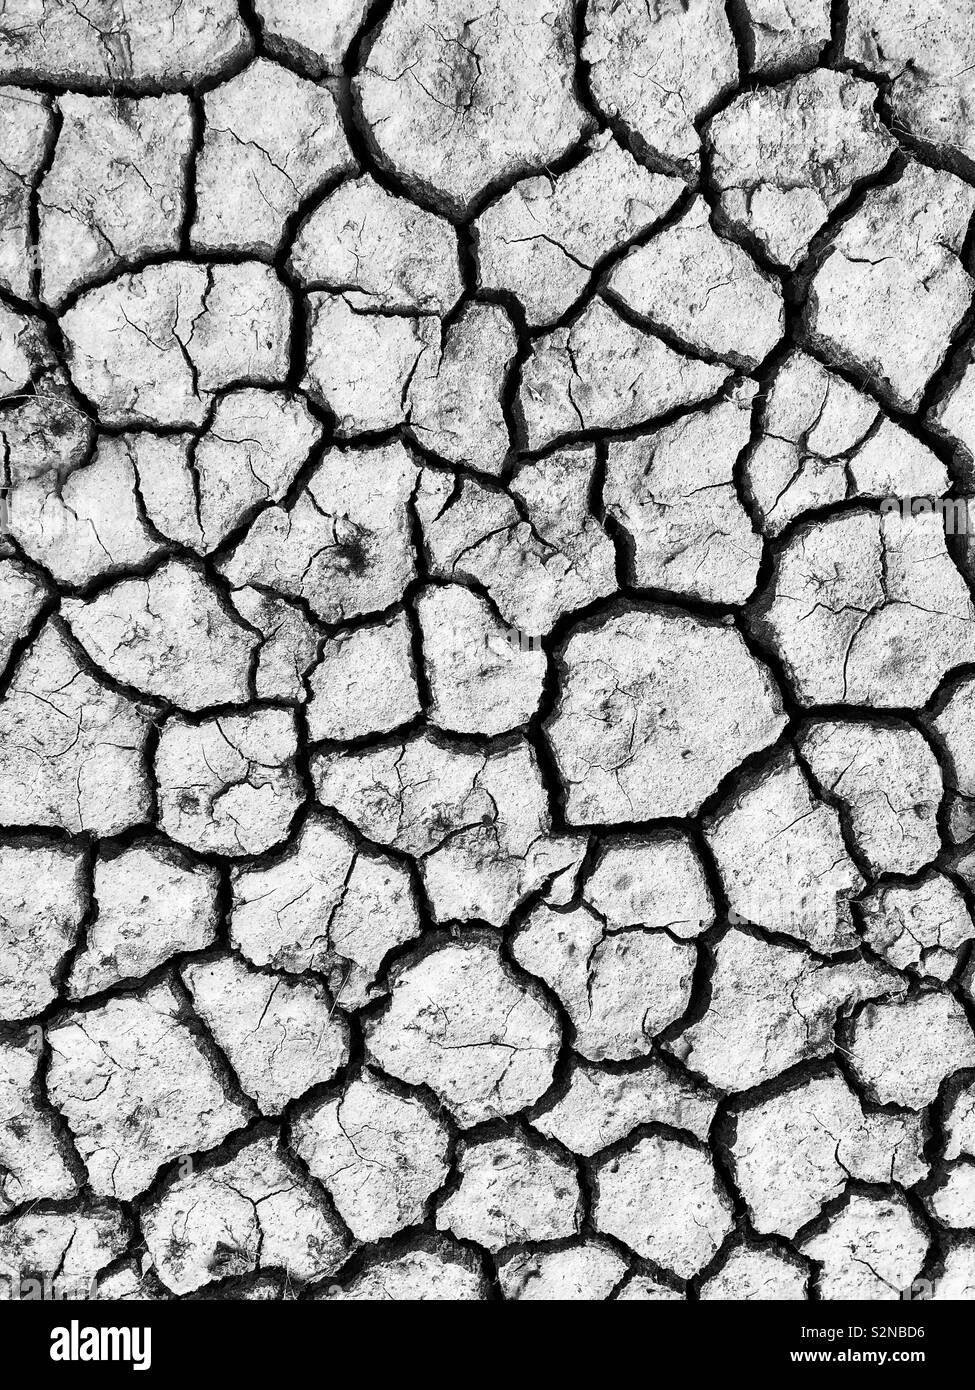 Dry cracked mud on a Saltmarsh. Stock Photo